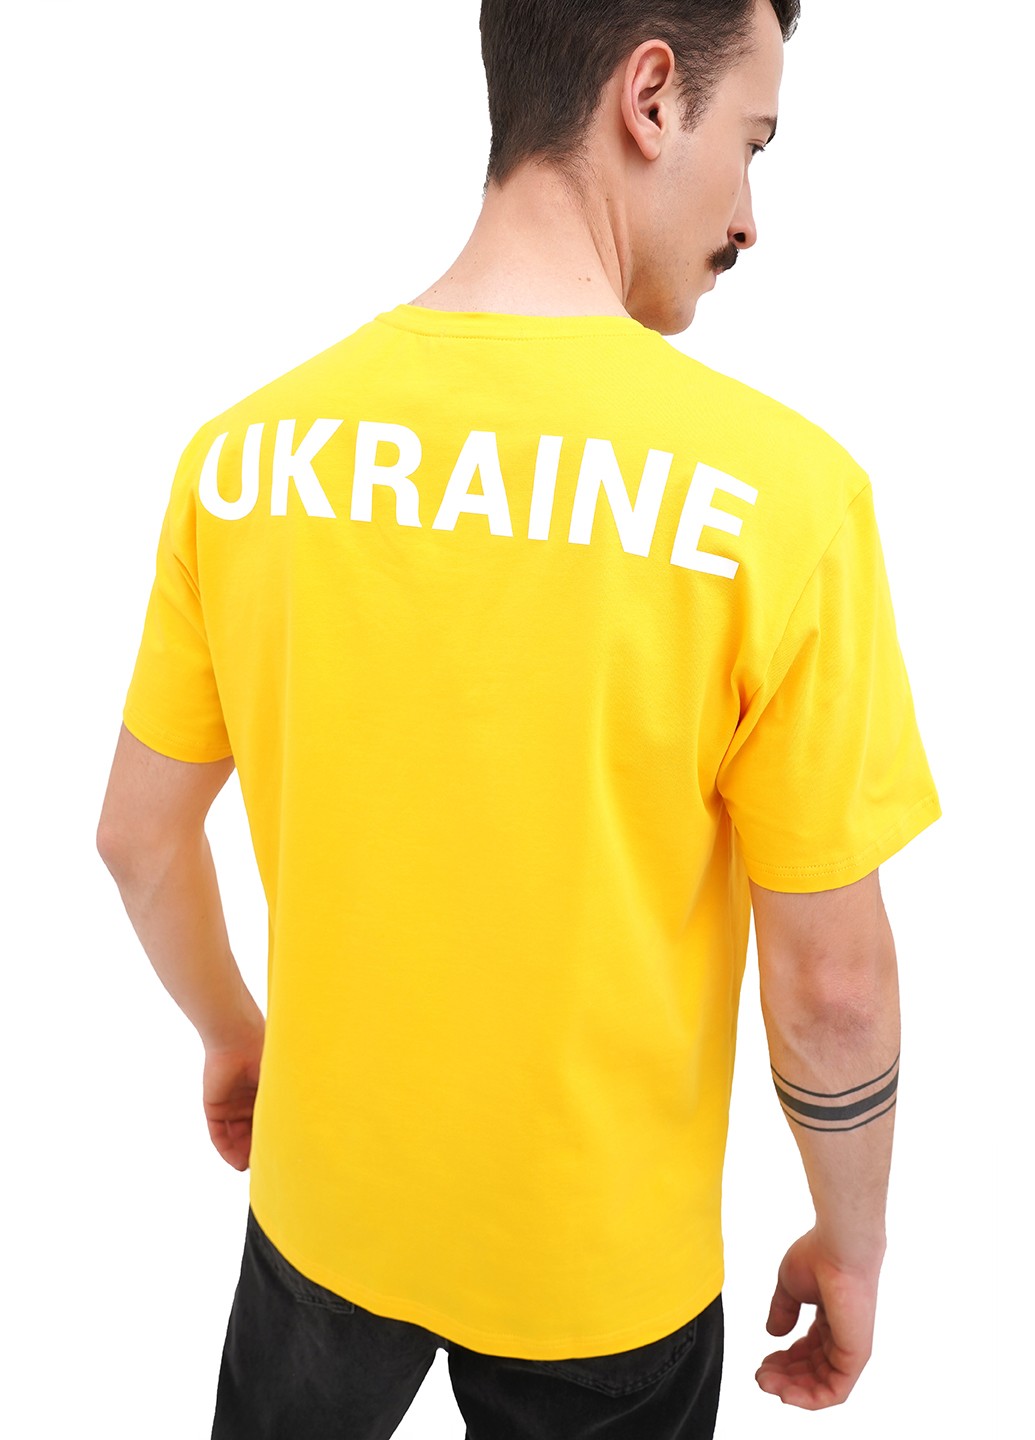 T-Shirt "Ukraine" yellow color